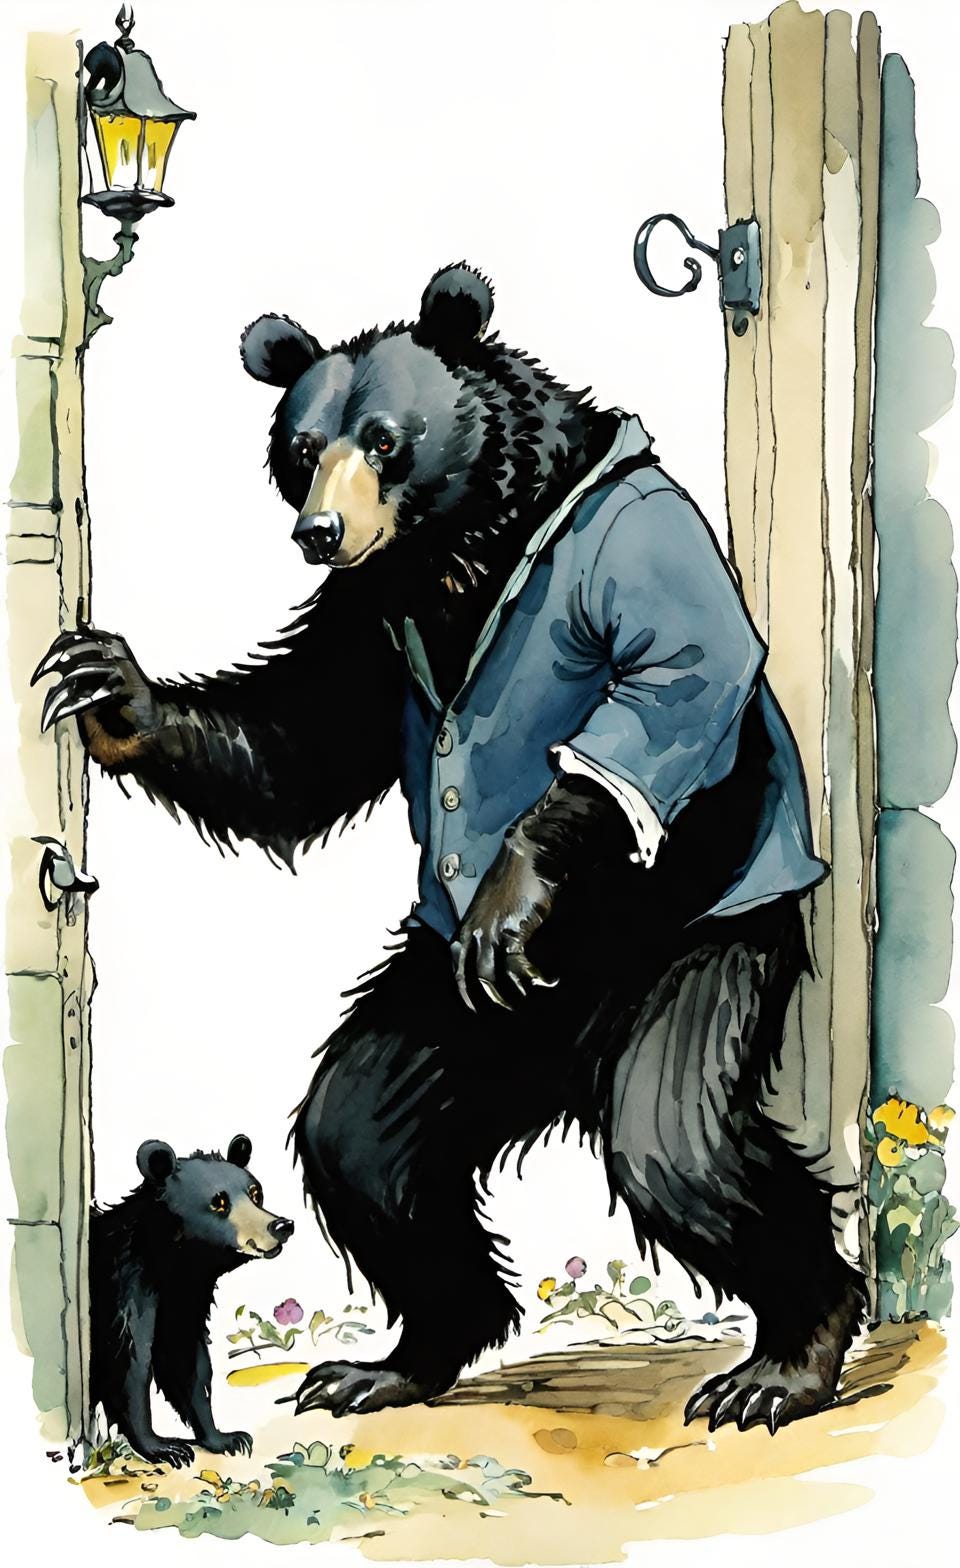 A black bear wearing a waistcoat and a little bear standing beside it.